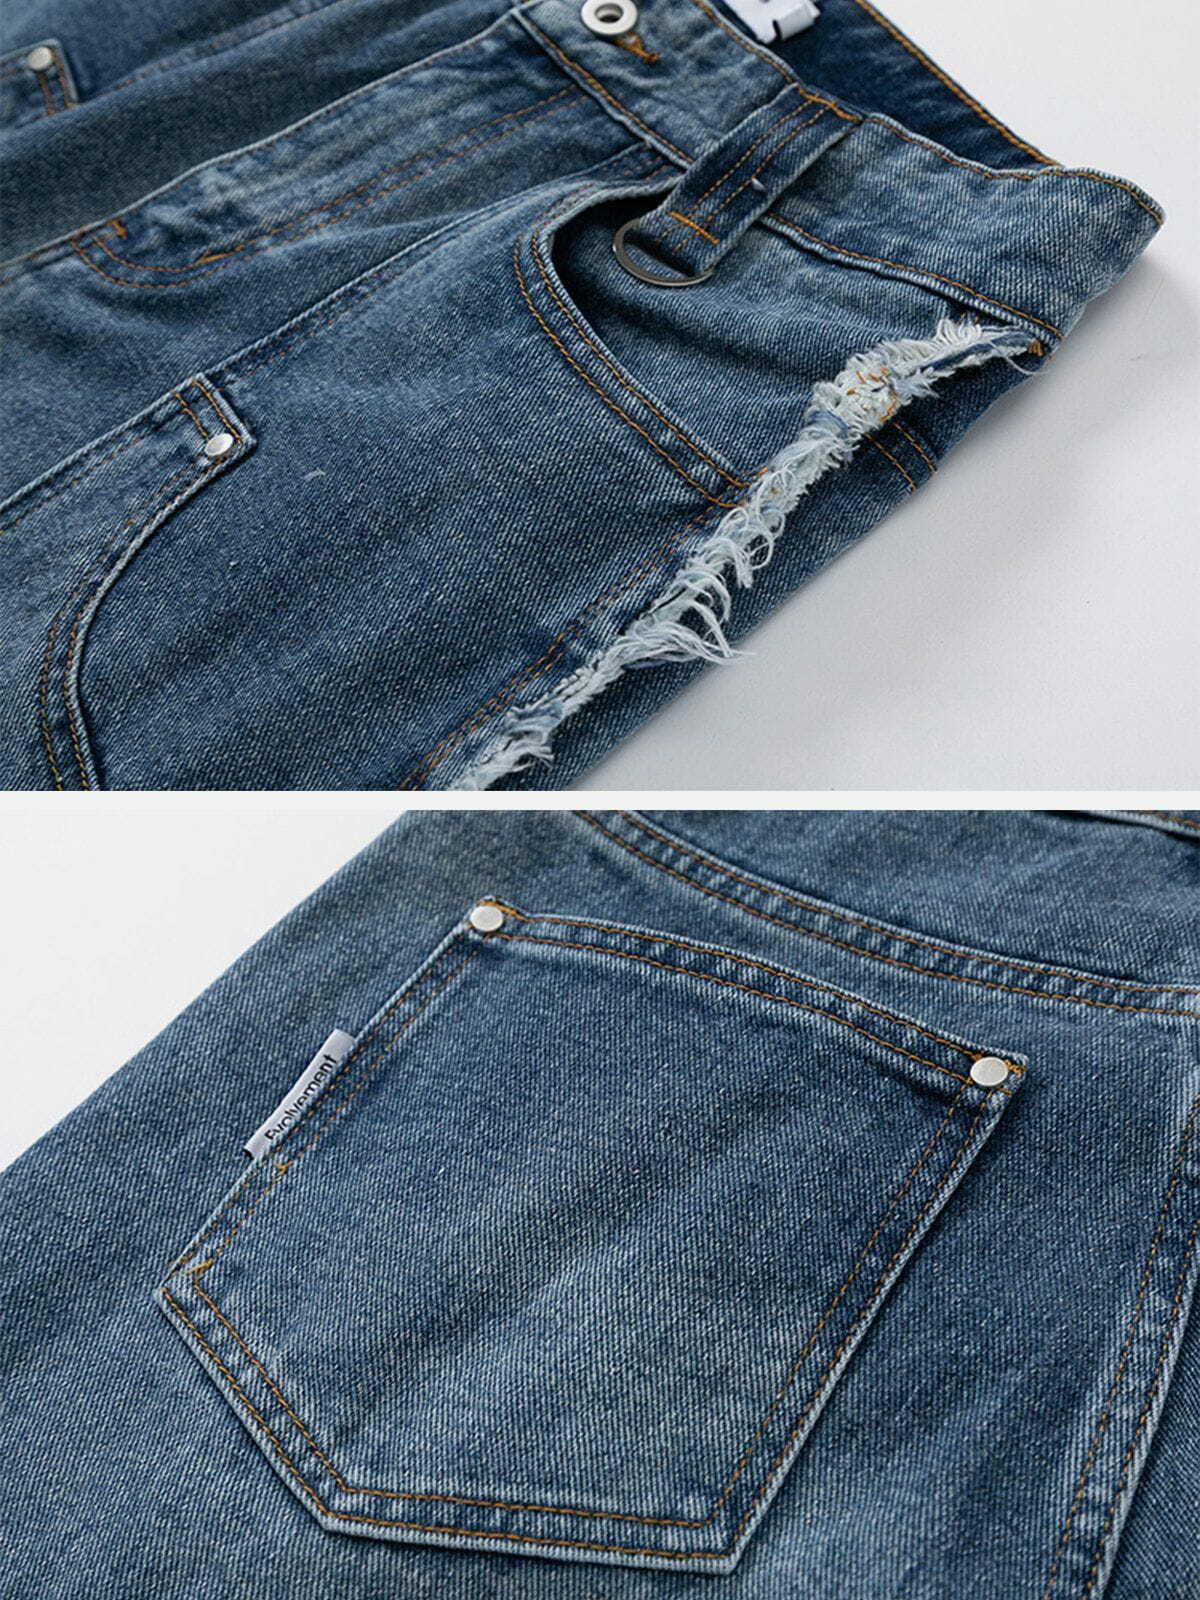 multipocket raw edge jeans edgy denim essential 4368